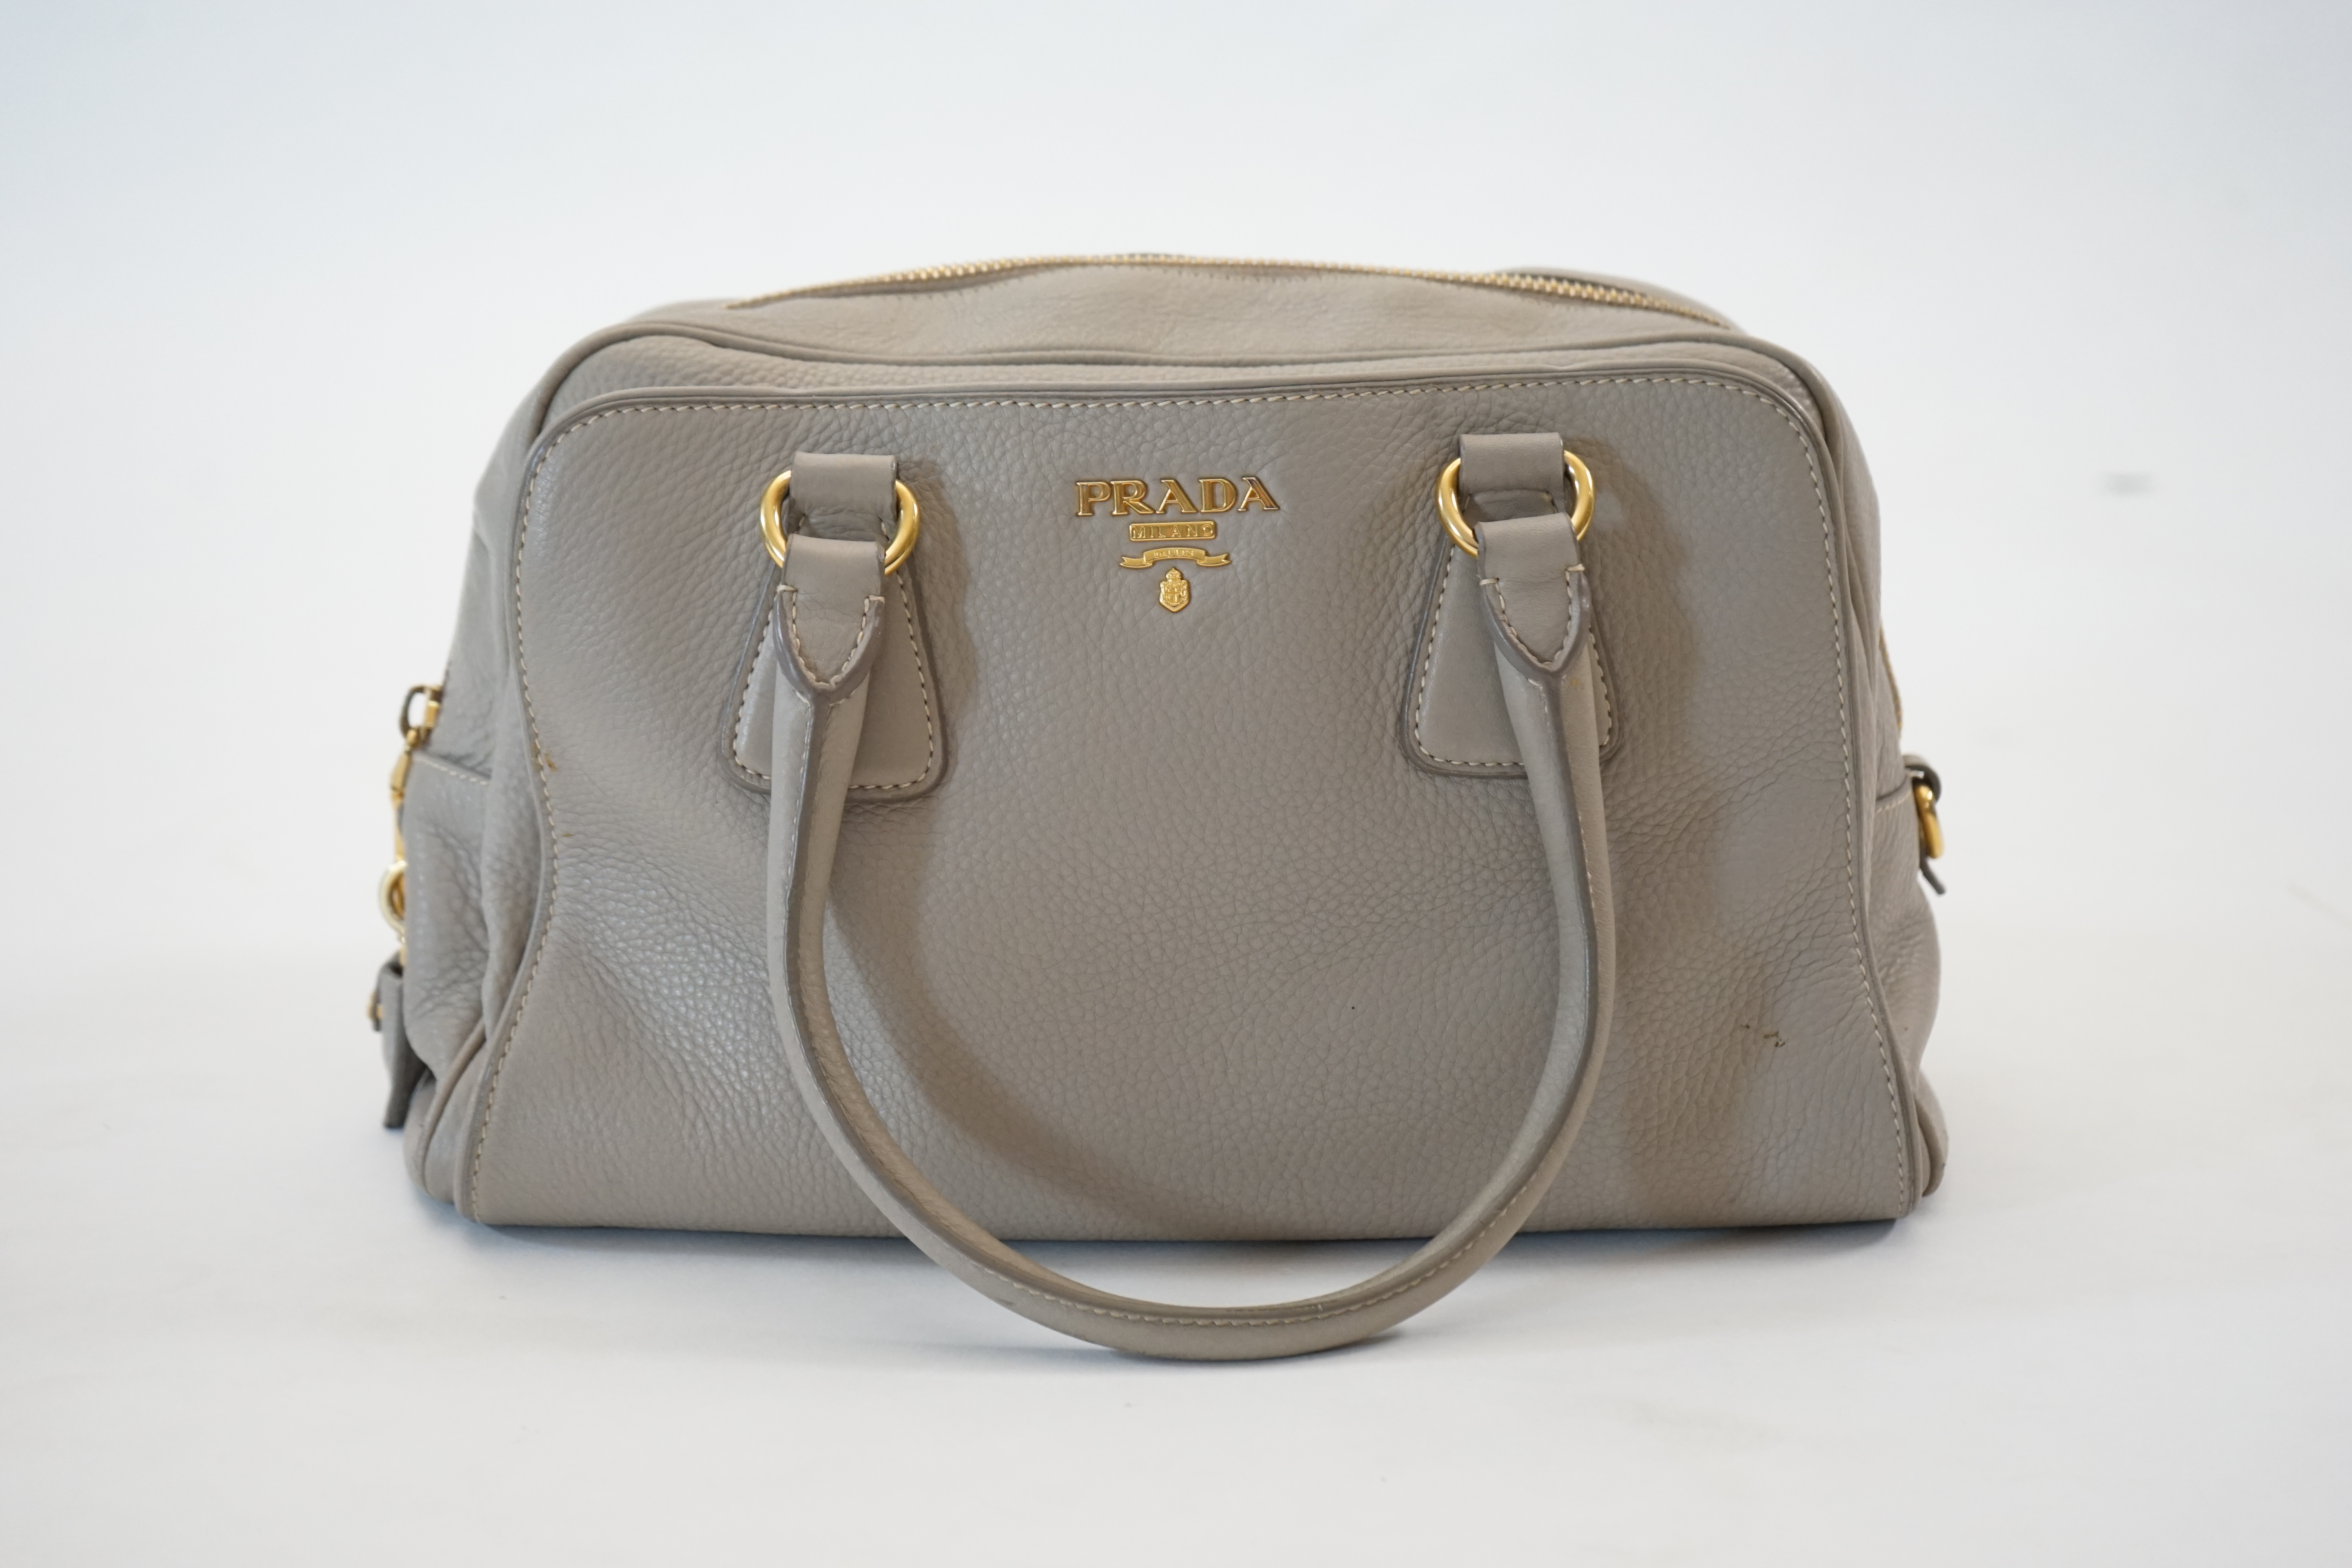 A Prada Vitello Daino Pomice leather handbag, width 35cm, depth 20cm, approx height 20cm